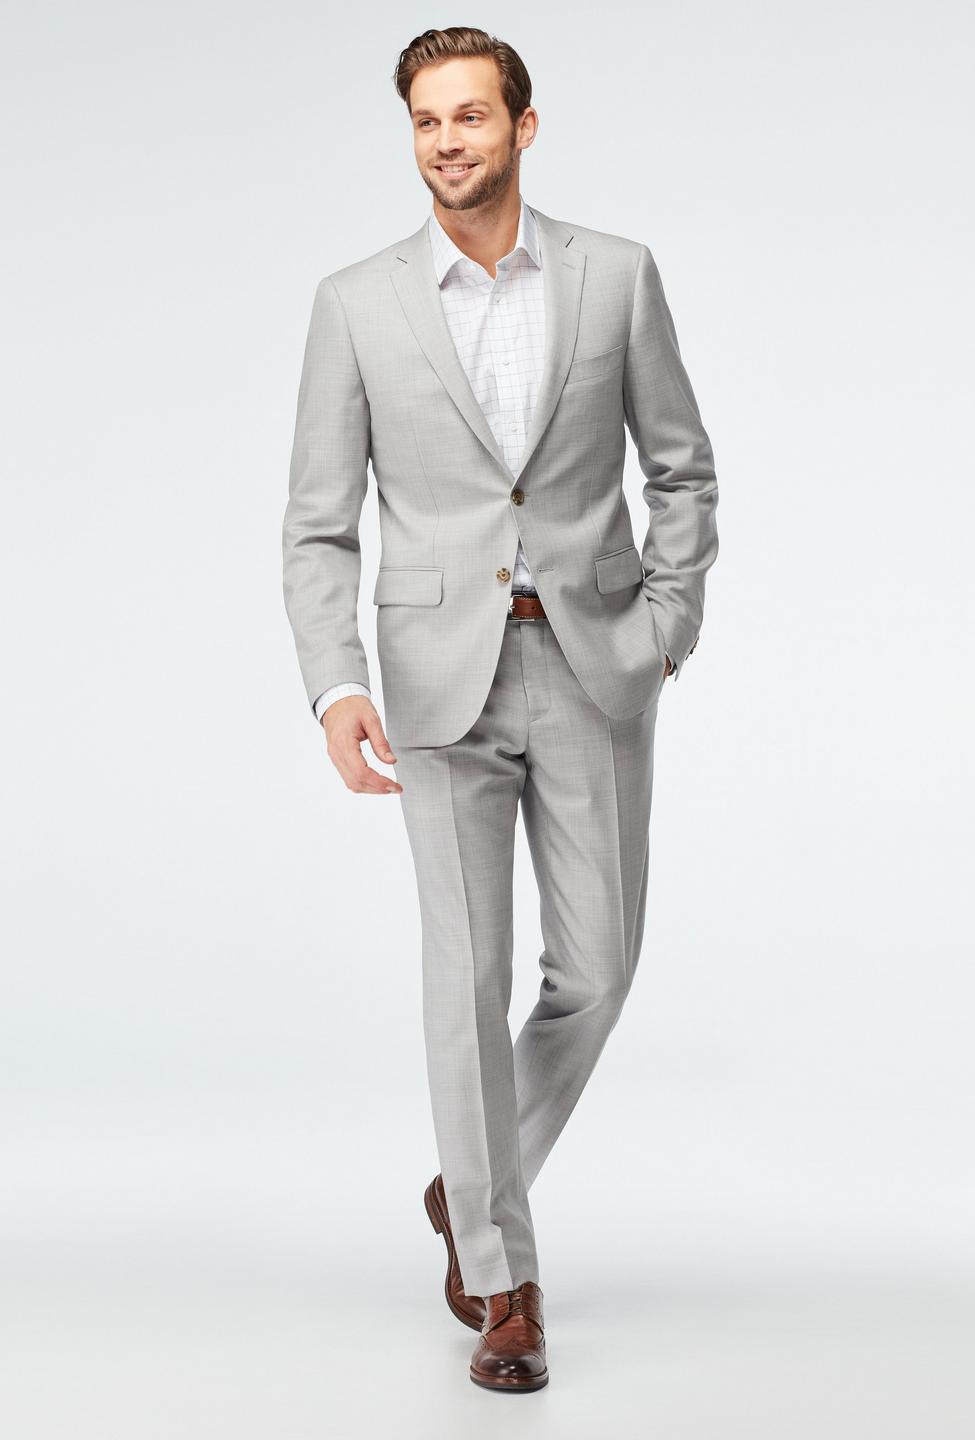 Gray blazer - Harrogate Solid Design from Luxury Indochino Collection